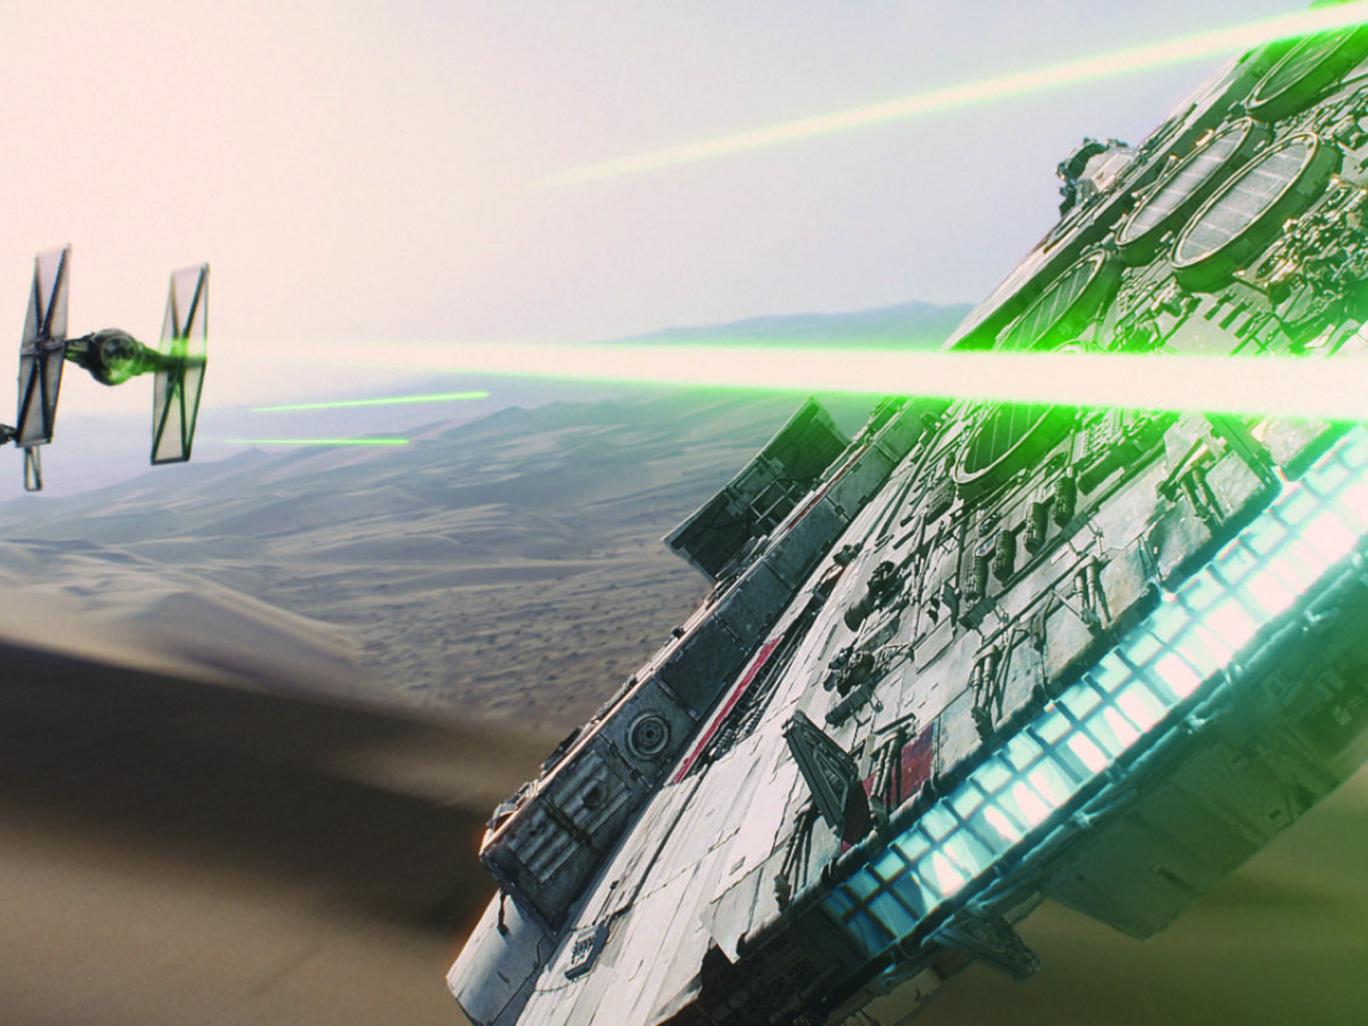 Star Wars: The Force Awakens Lucasfilm 2015